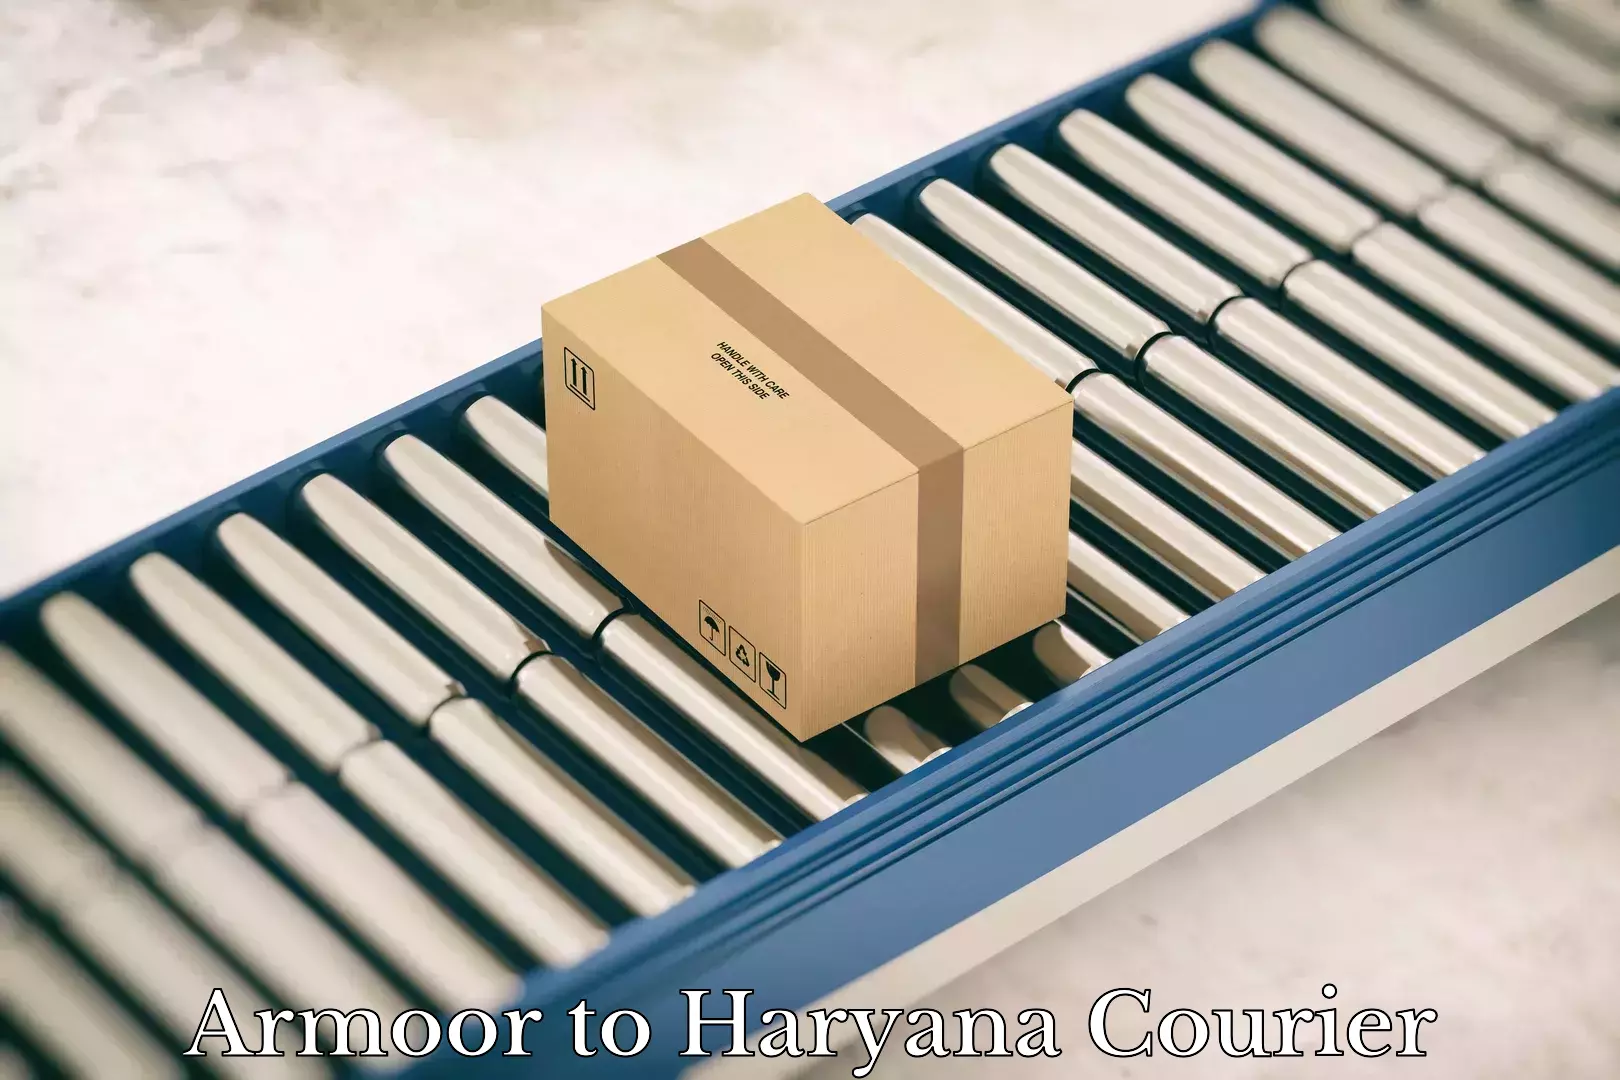 Courier service partnerships Armoor to Haryana